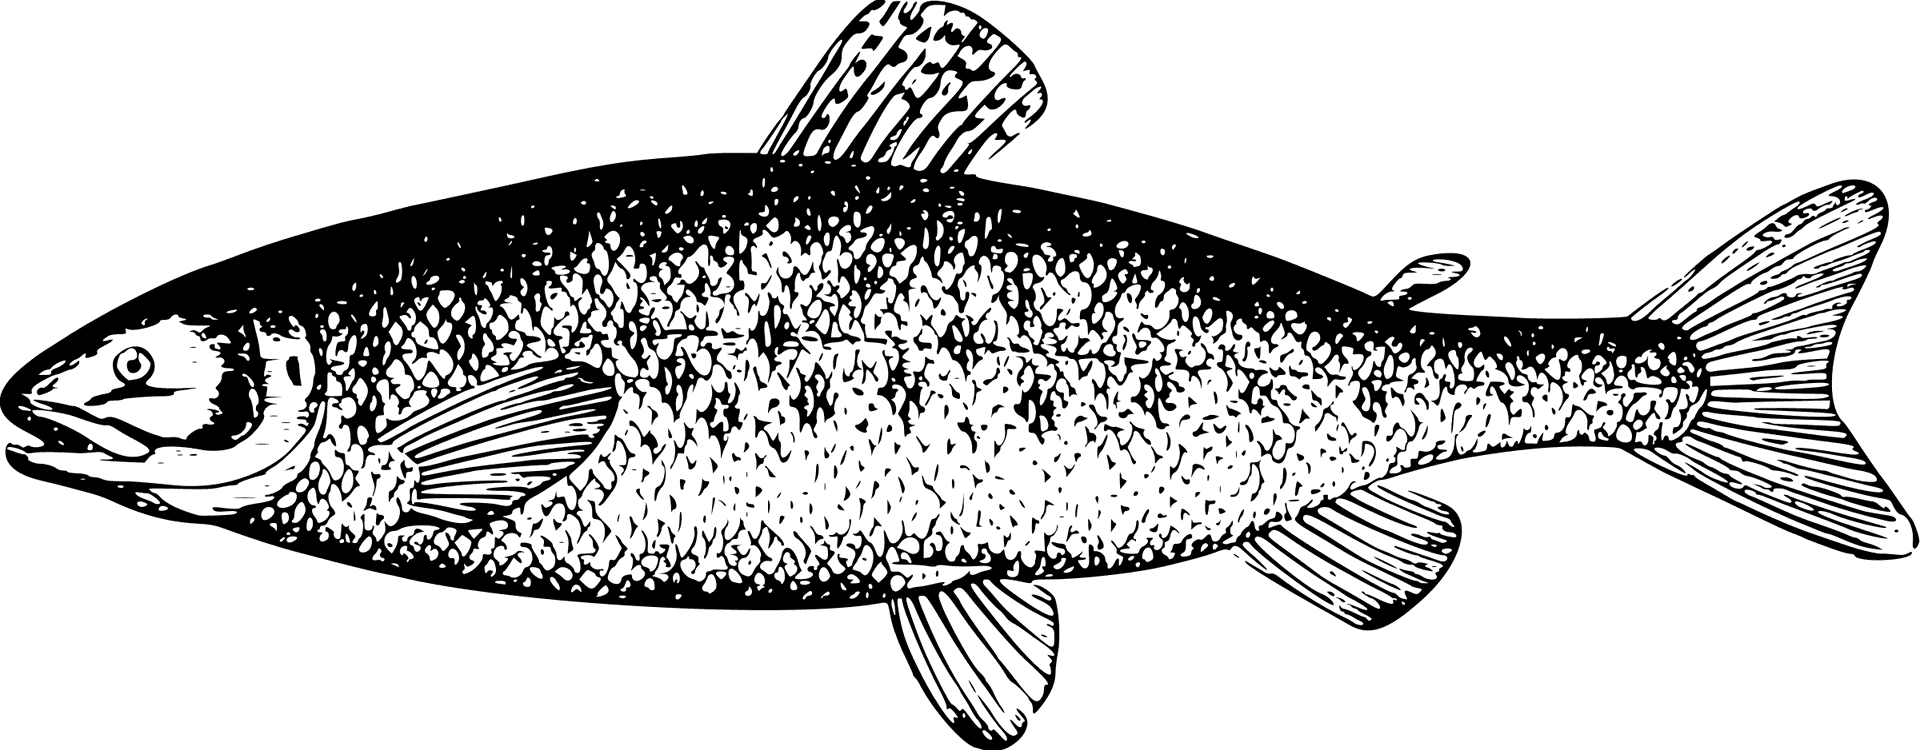 Detailed Salmon Illustration.png PNG